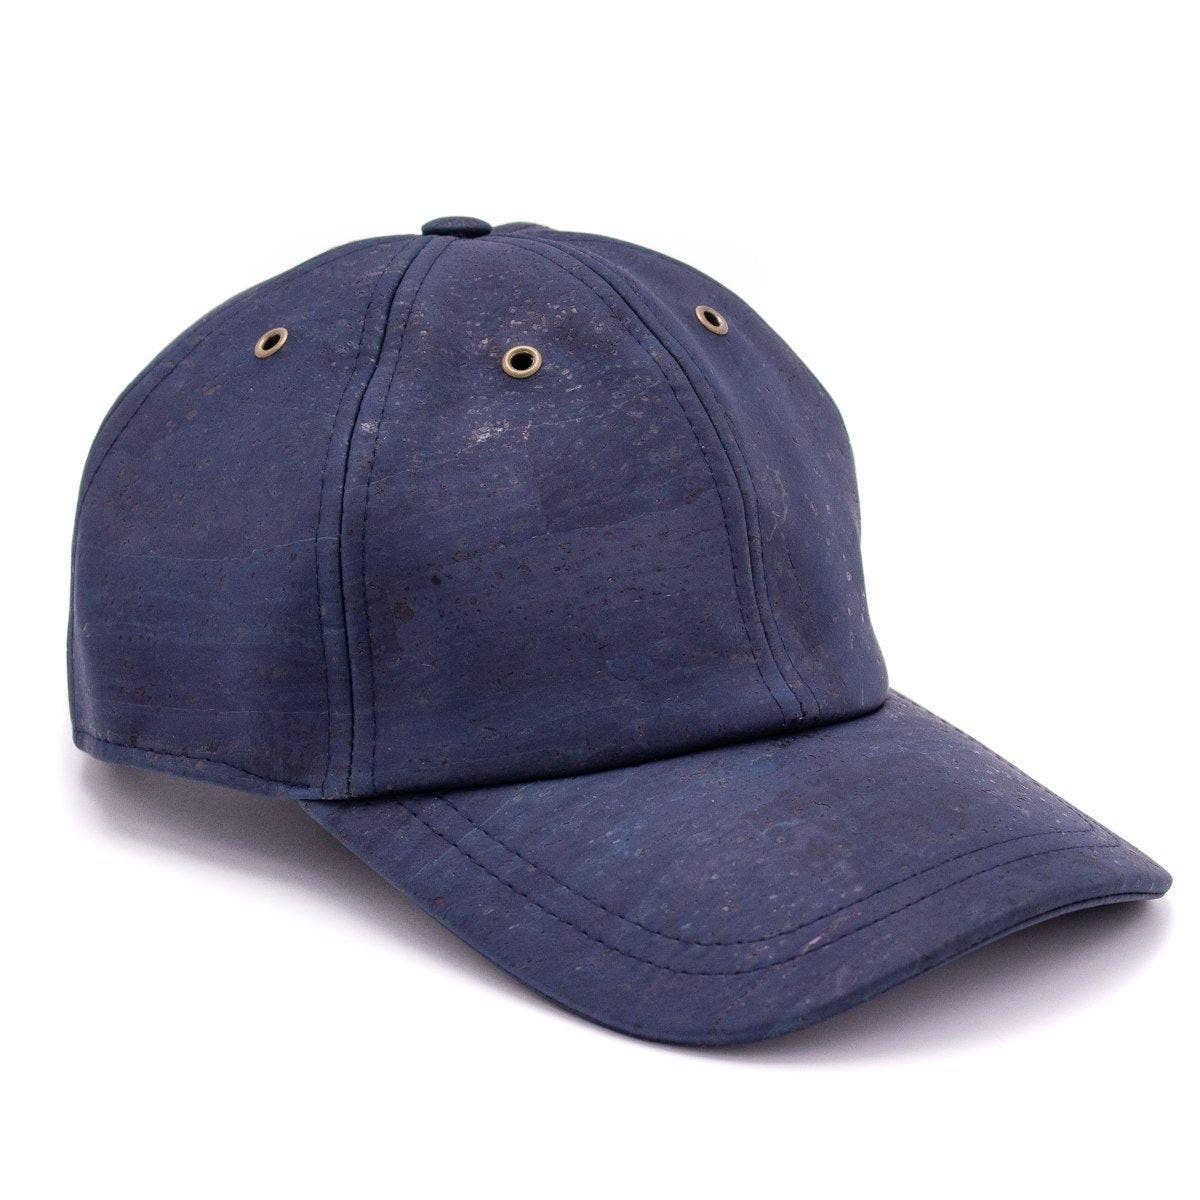 Cork Baseball Cap and Vegan Leather Cap in Navy Blue